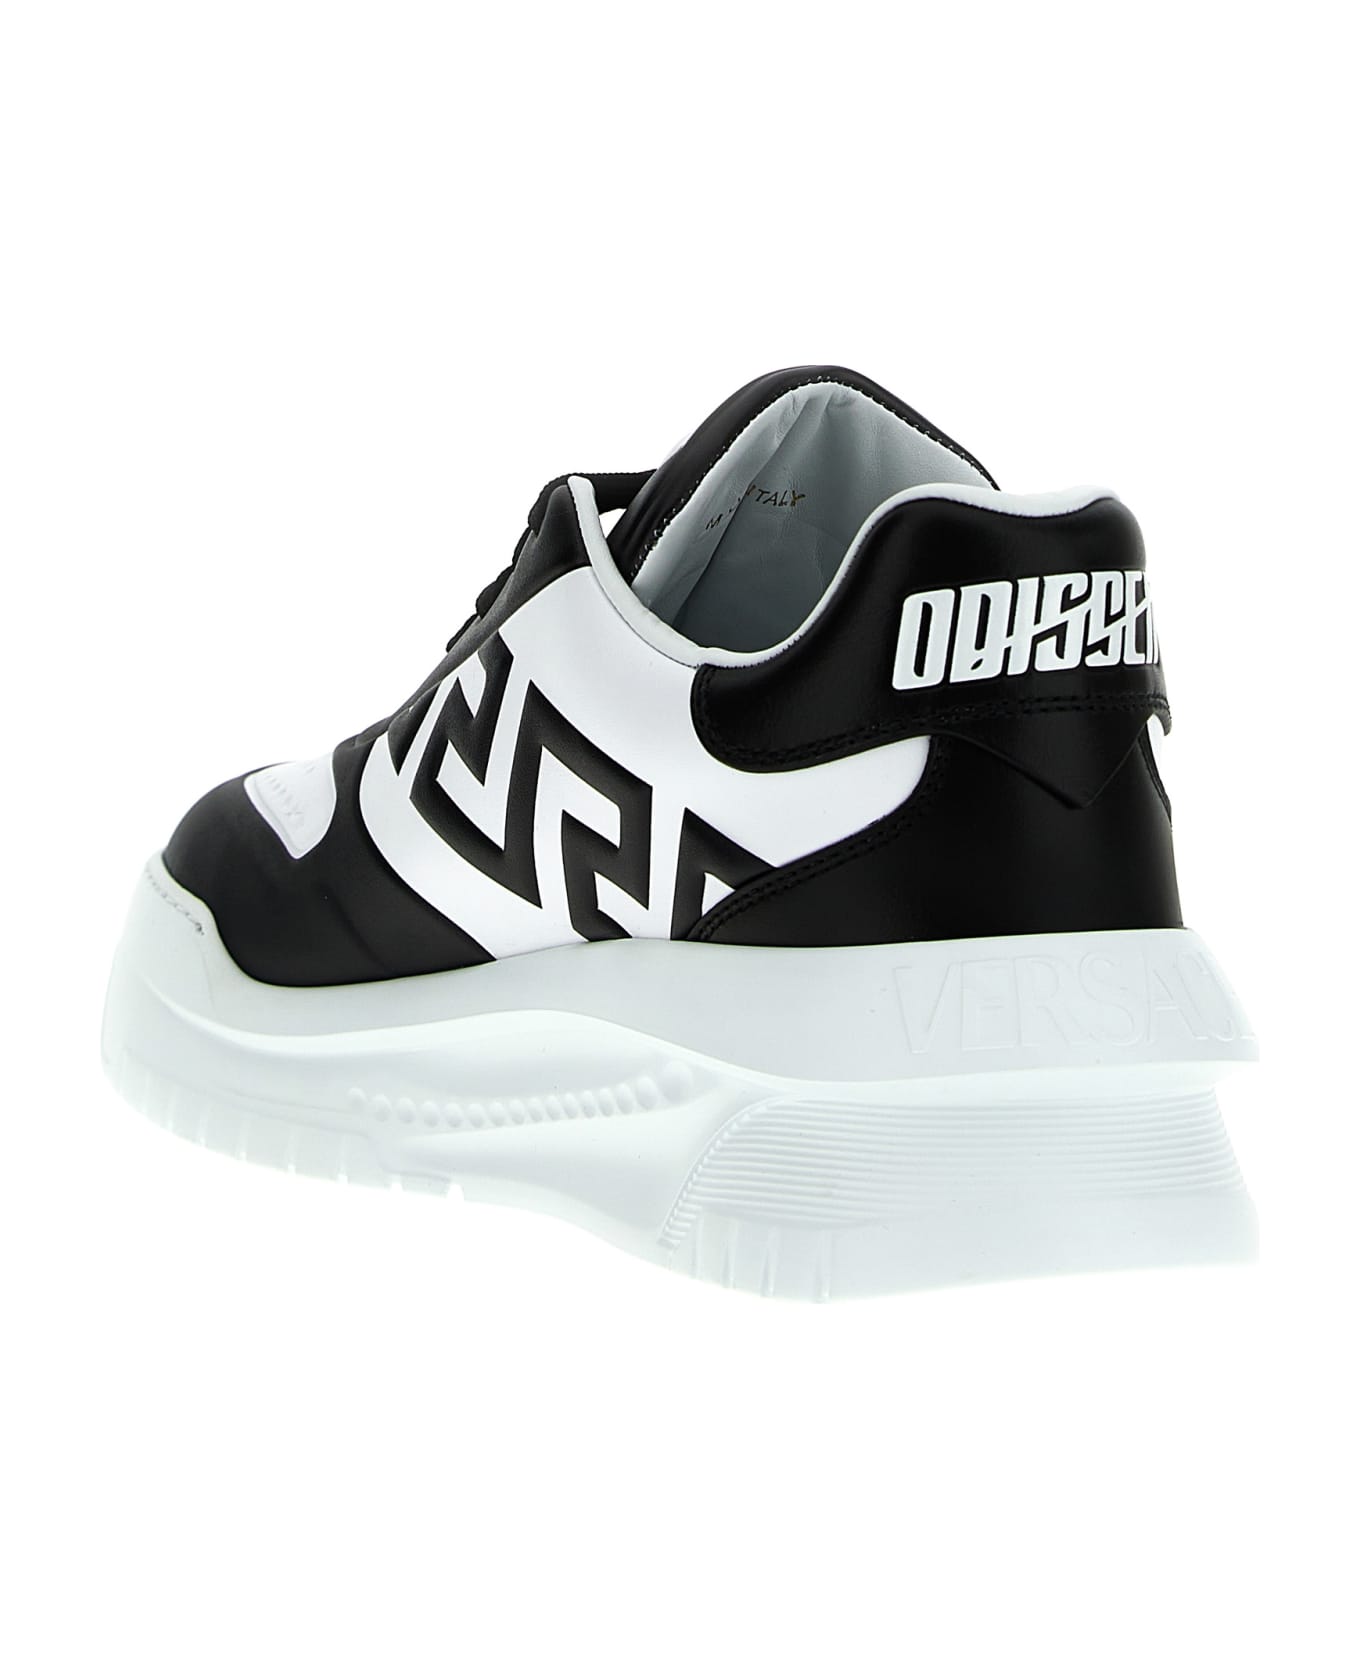 Versace 'odissea Greca' Sneakers - BLACK/WHITE